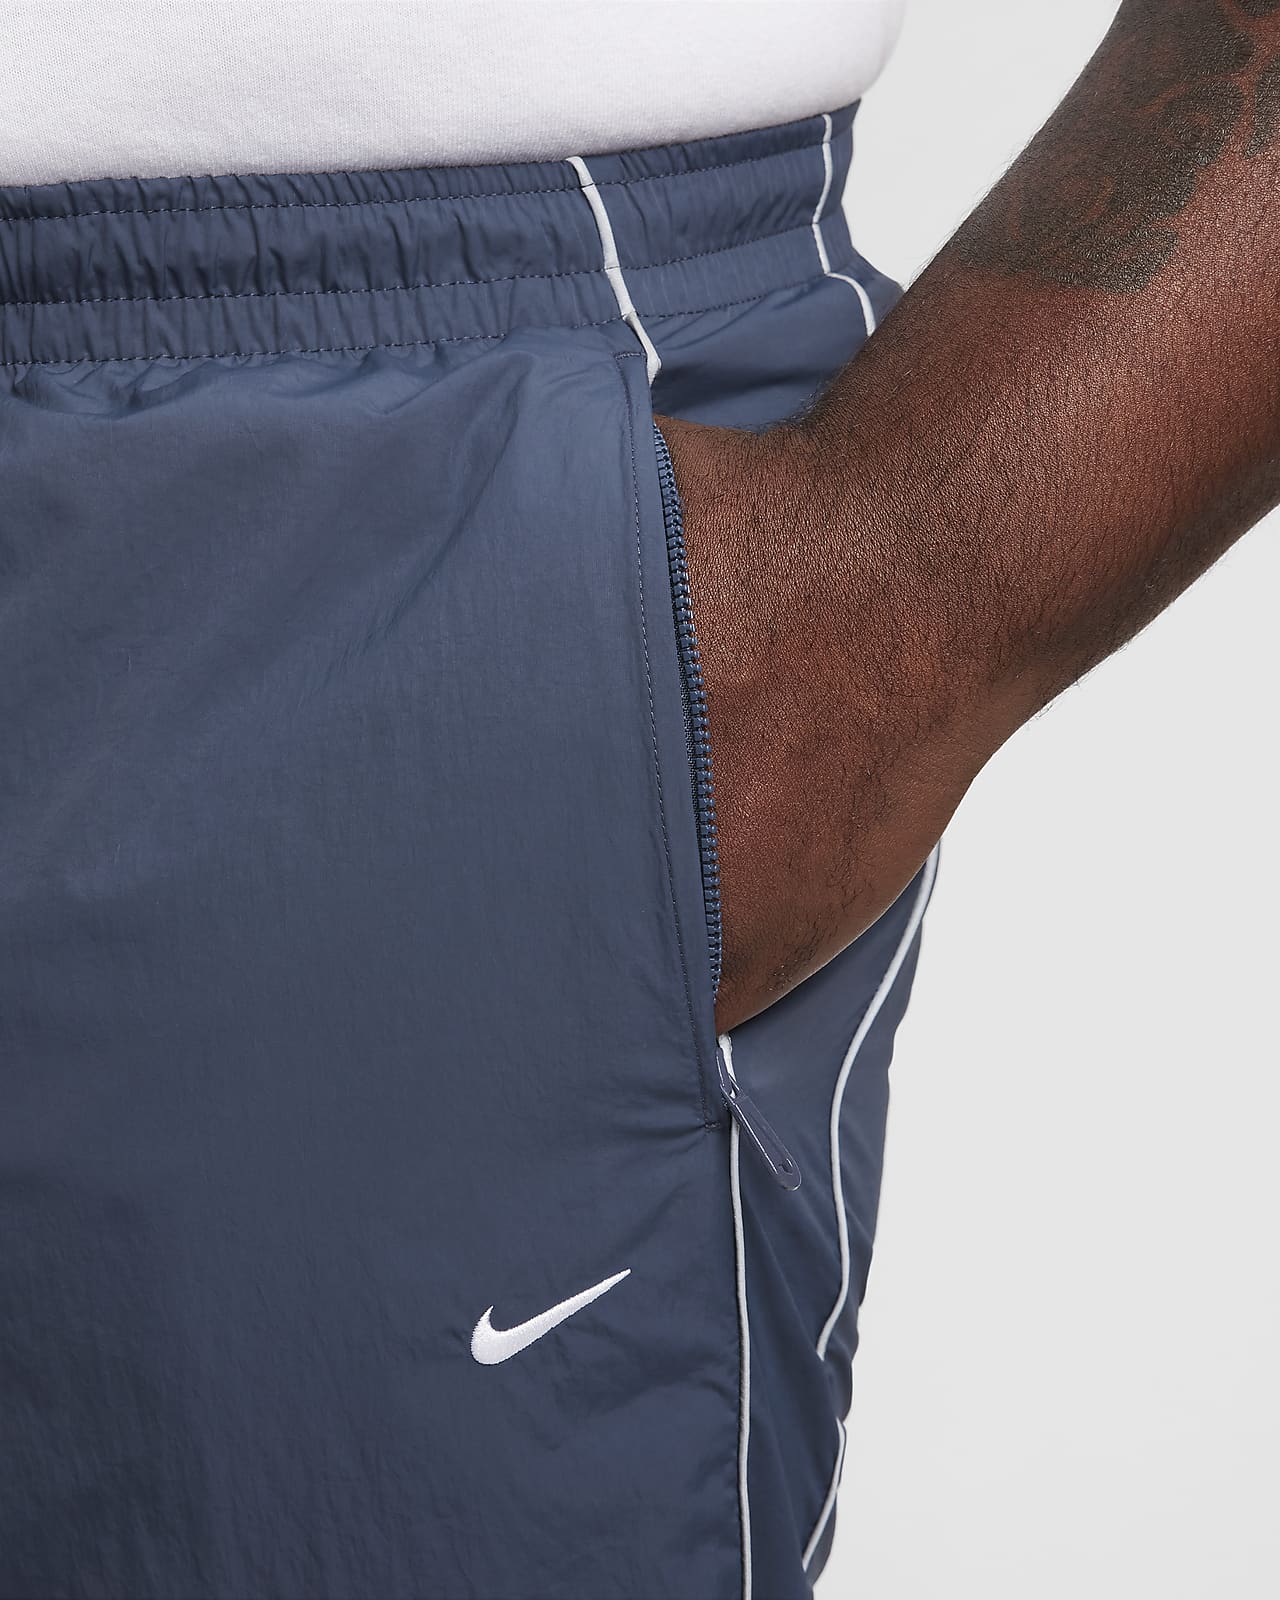 Nike Solo Swoosh Men's Track Pants.